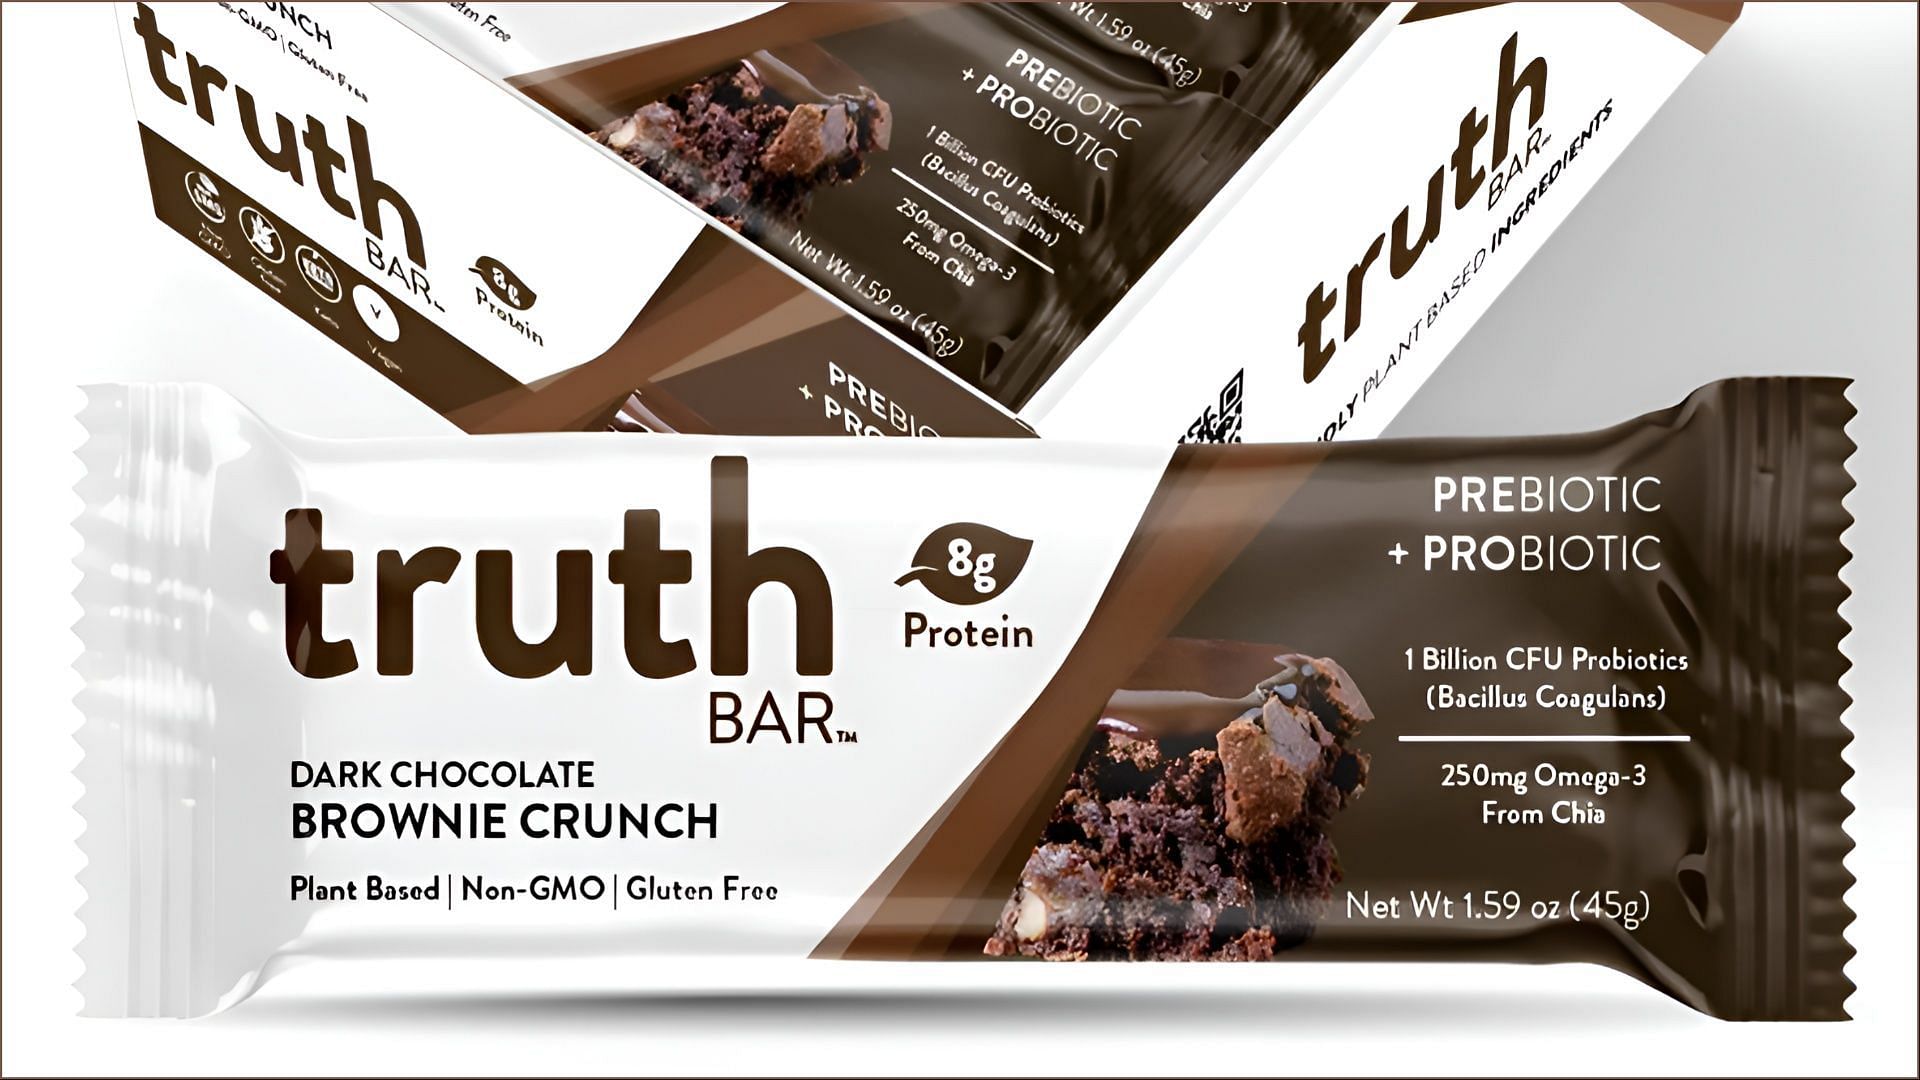 Truth Bar introduces all-new Dark Chocolate Brownie Crunch snack bars (Image via Truth Bar)